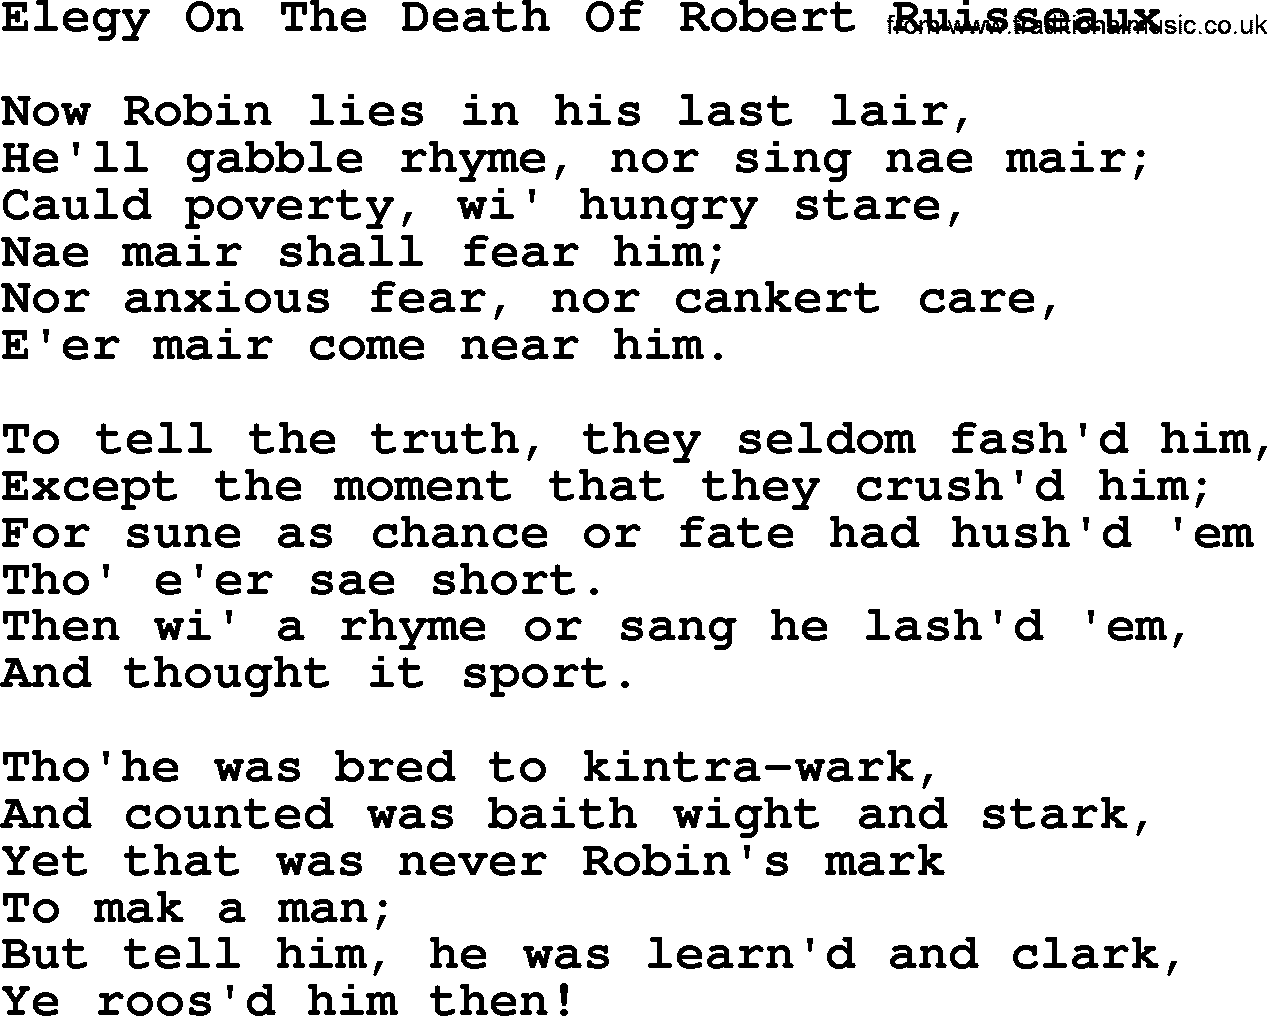 Robert Burns Songs & Lyrics: Elegy On The Death Of Robert Ruisseaux